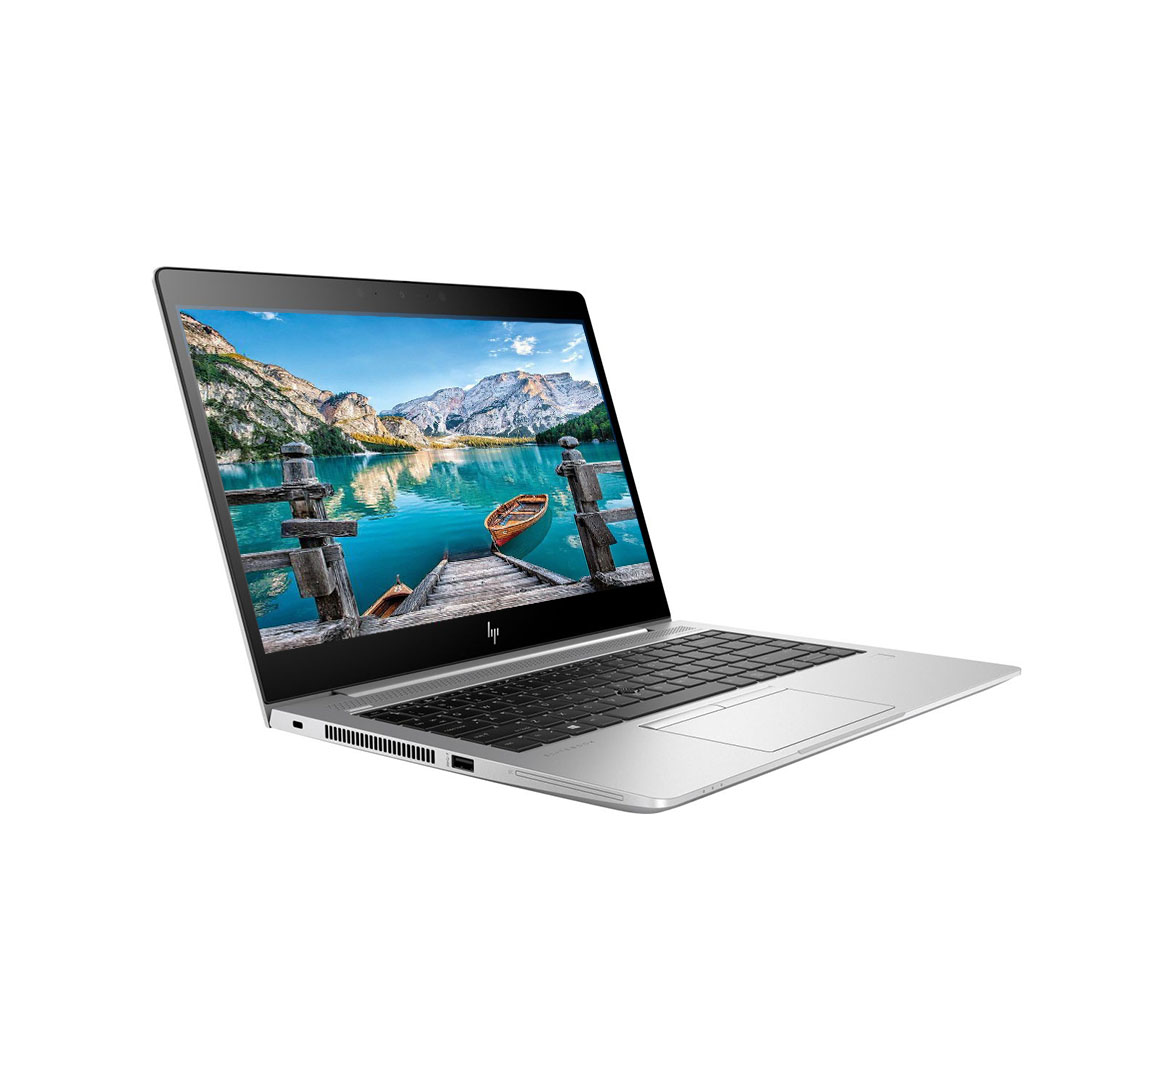 HP EliteBook 840 G6 Business Laptop, Intel Core i5-8th Generation CPU, 16GB RAM, 256GB SSD, 14 inch Display, Windows 10 Pro